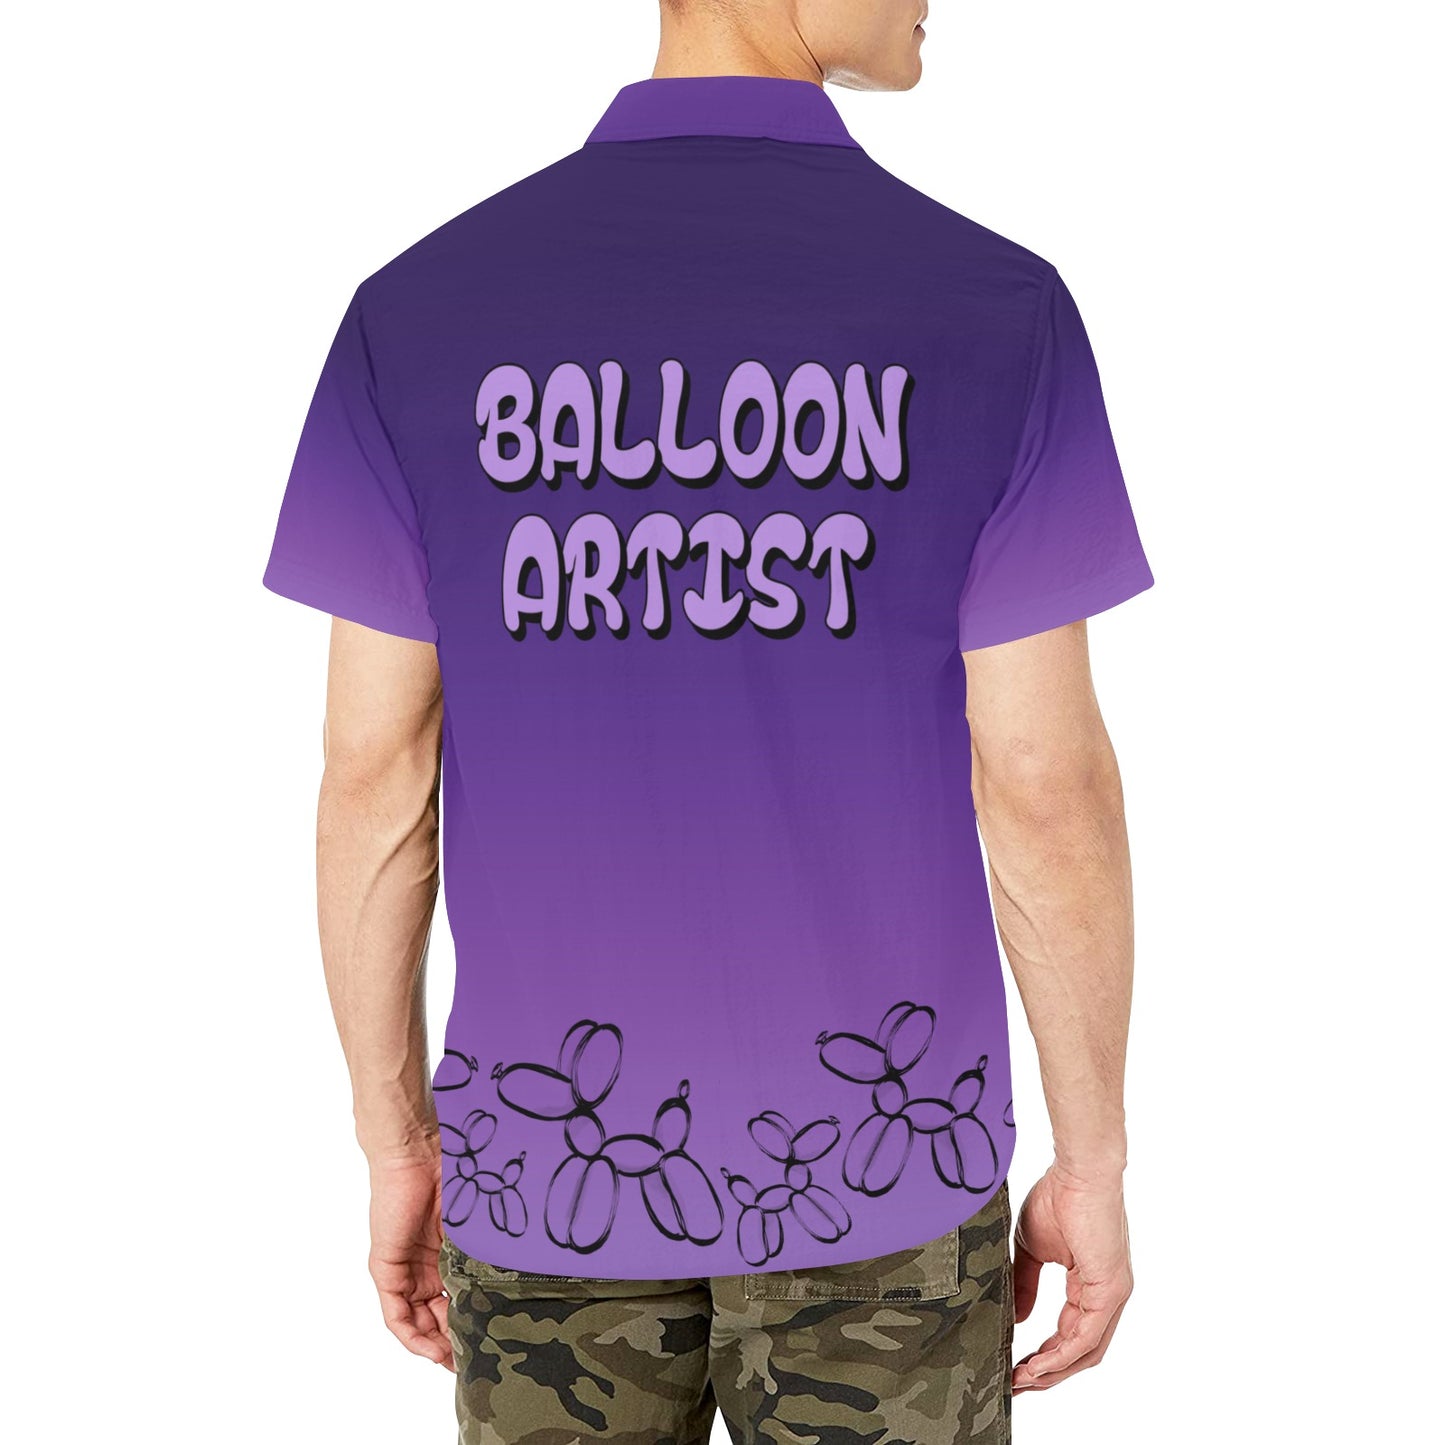 Professional Balloon Artist Shirt Purple with balloon dogs